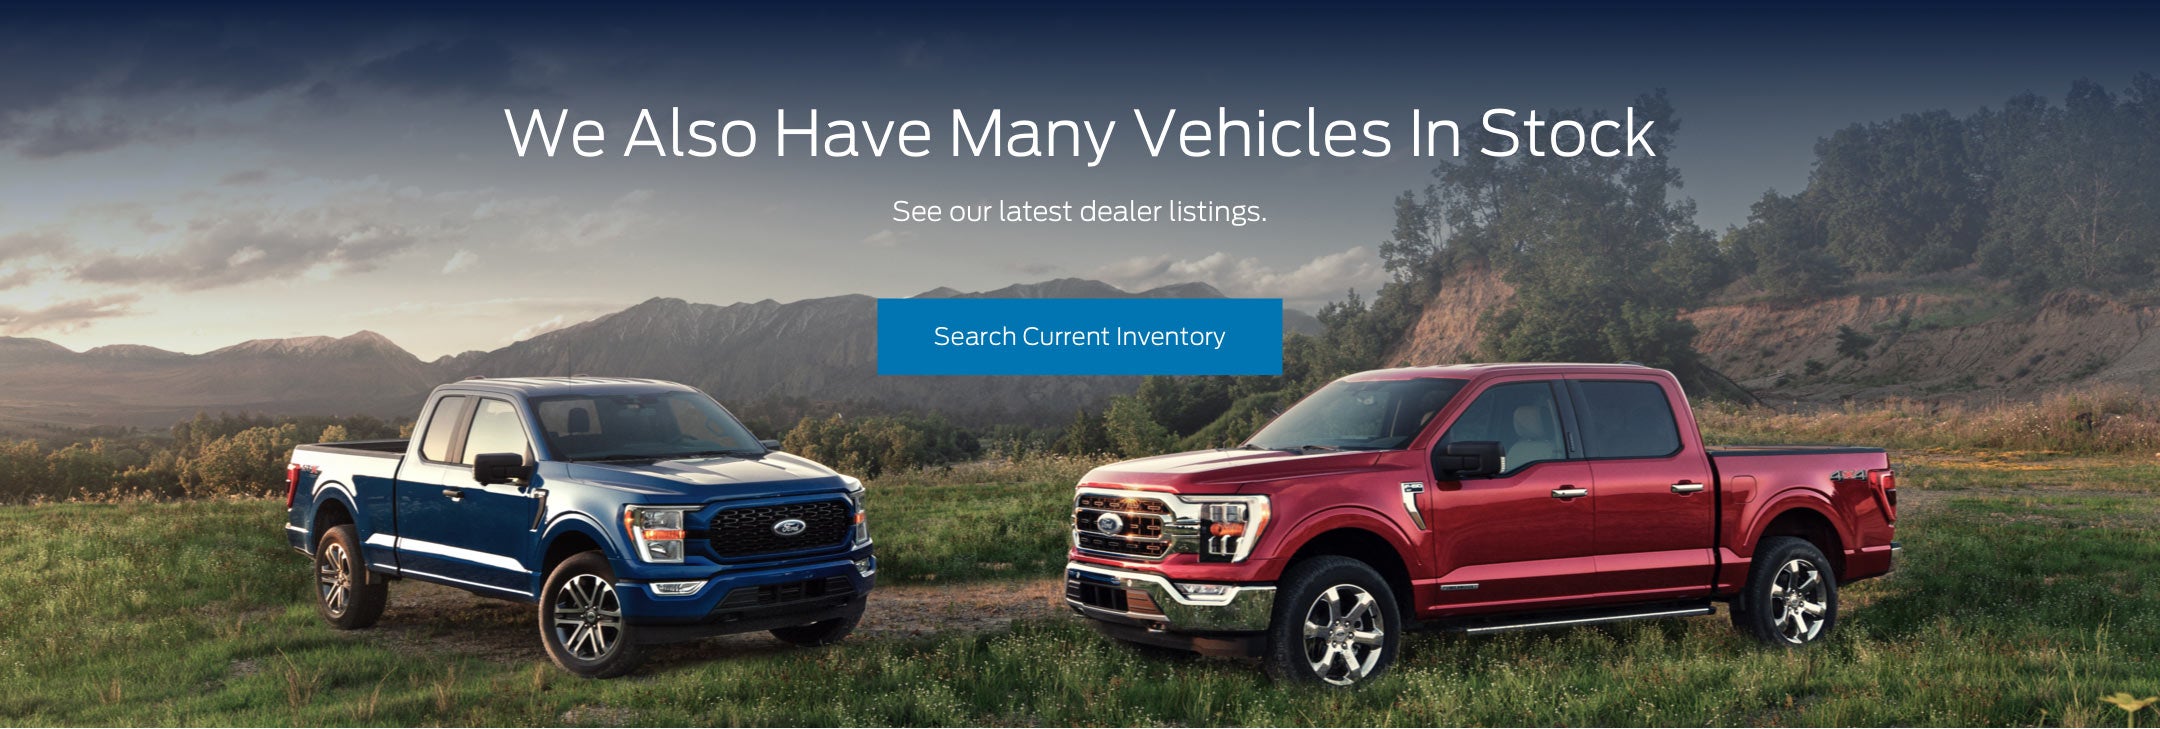 Ford vehicles in stock | Gilbert & Baugh Ford, Inc. in Albertville AL